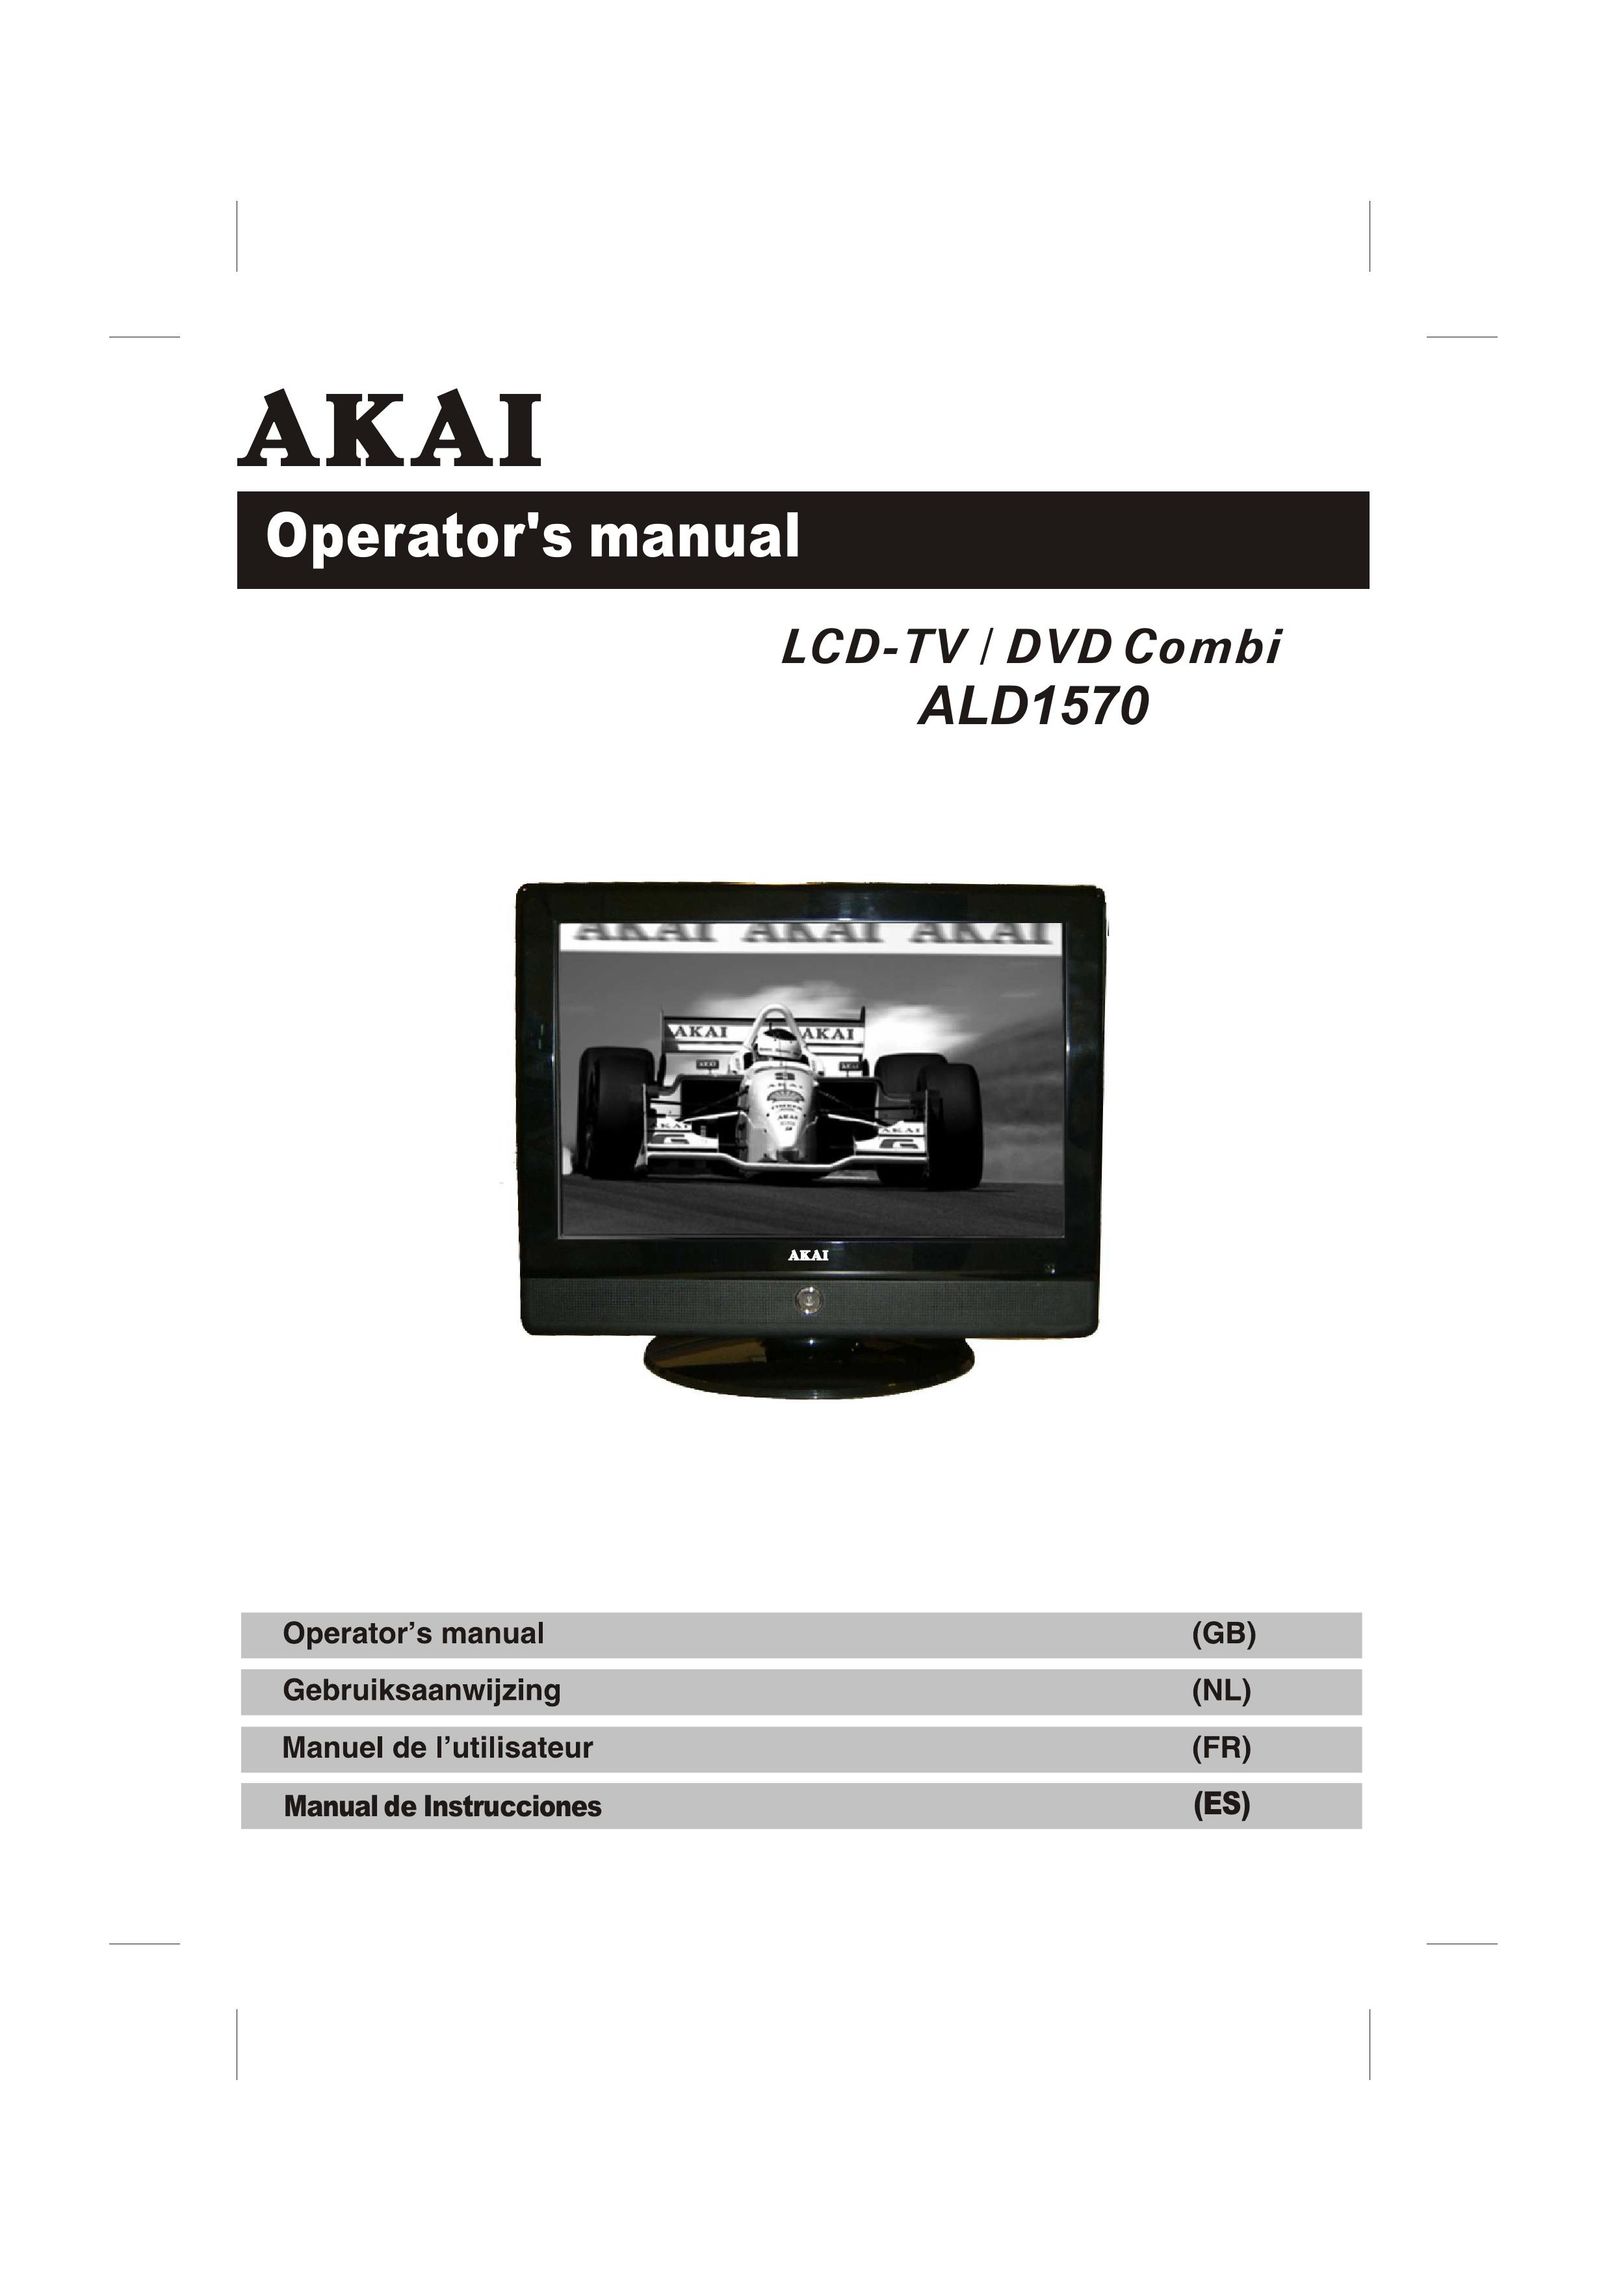 Akai ALD1570 Flat Panel Television User Manual